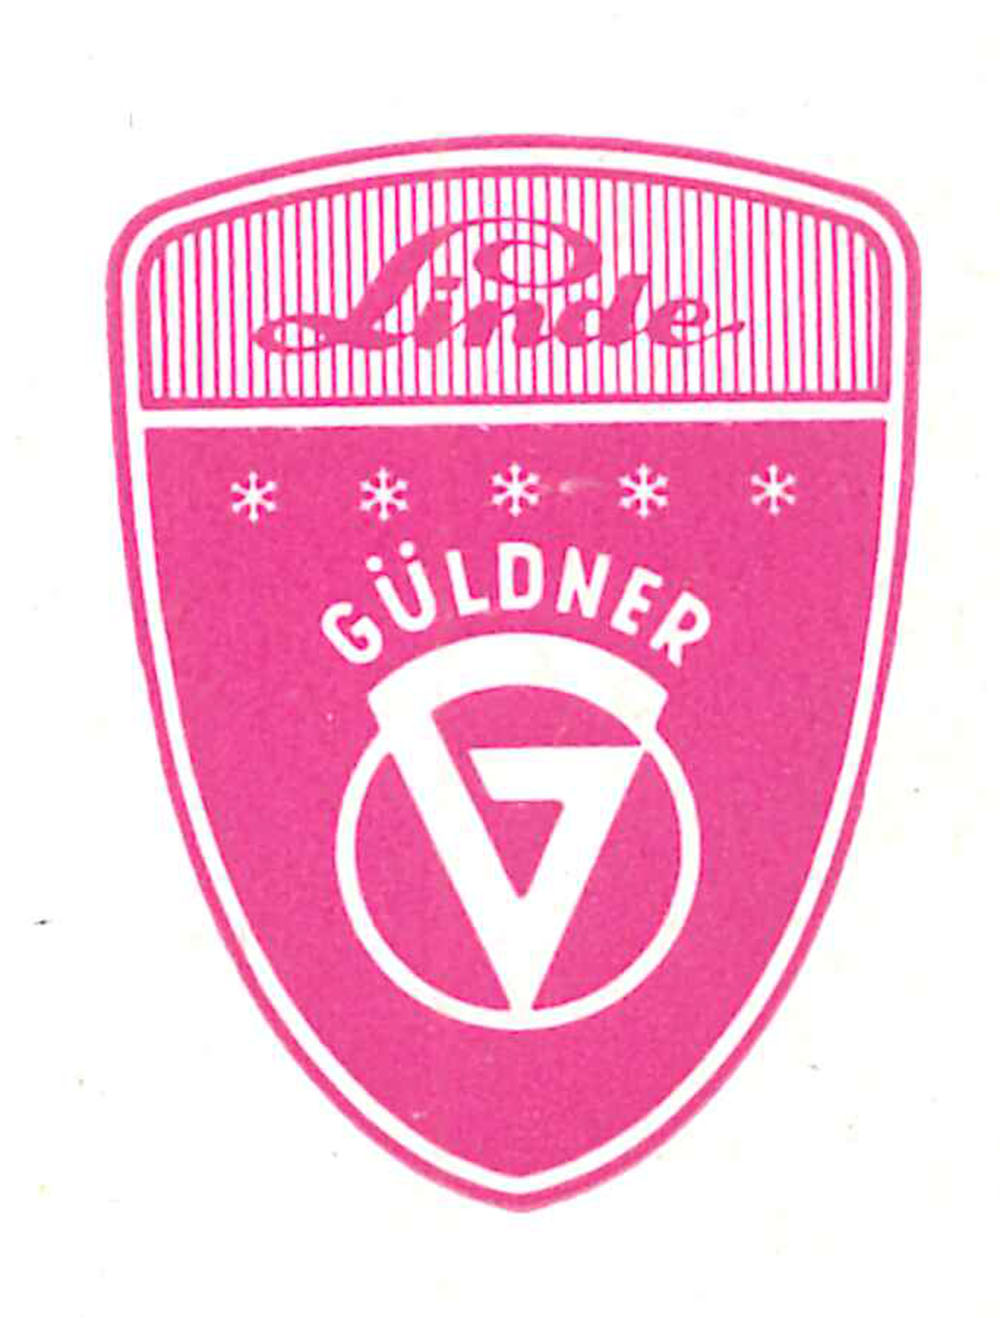 Güldner-Motoren-Gesellschaft GmbH